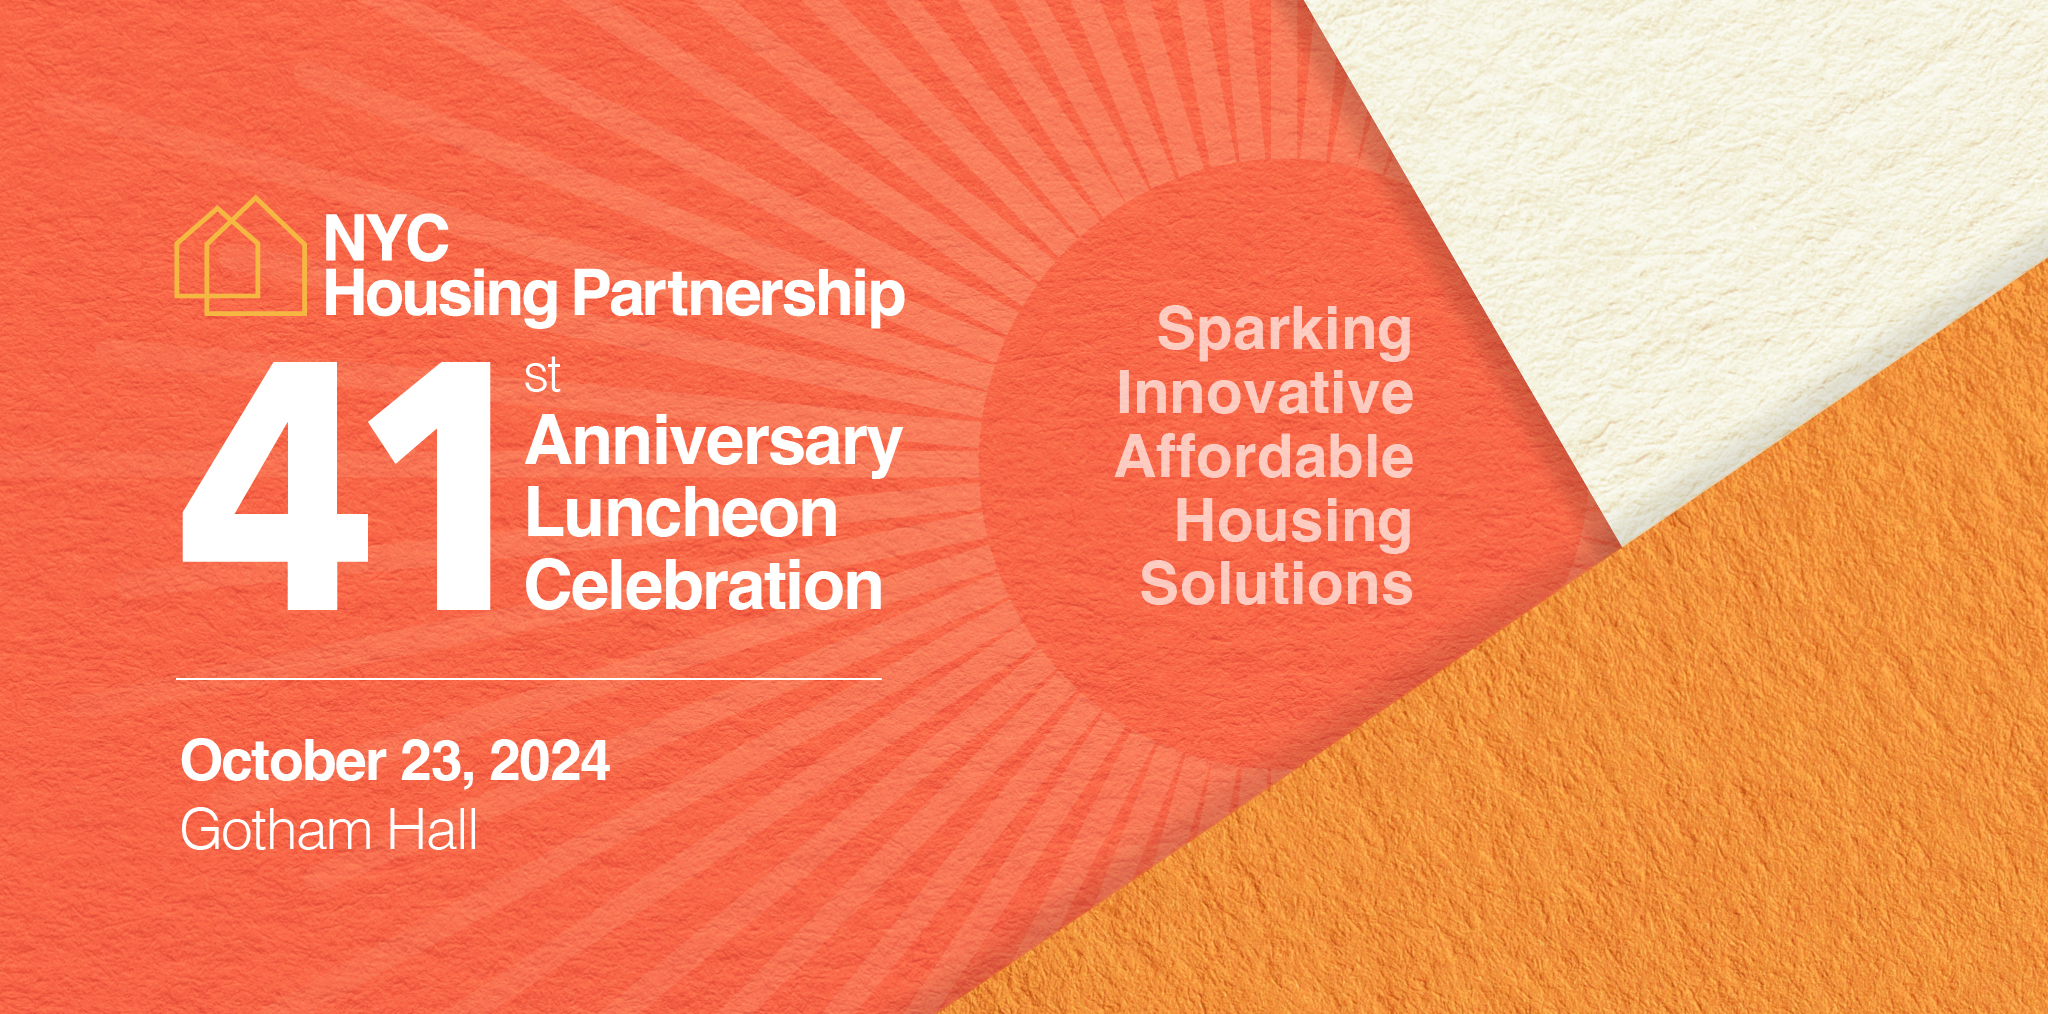 NYC Housing Partnership 41st Anniversary Luncheon Celebration - October 23, 2024 at Gotham Hall